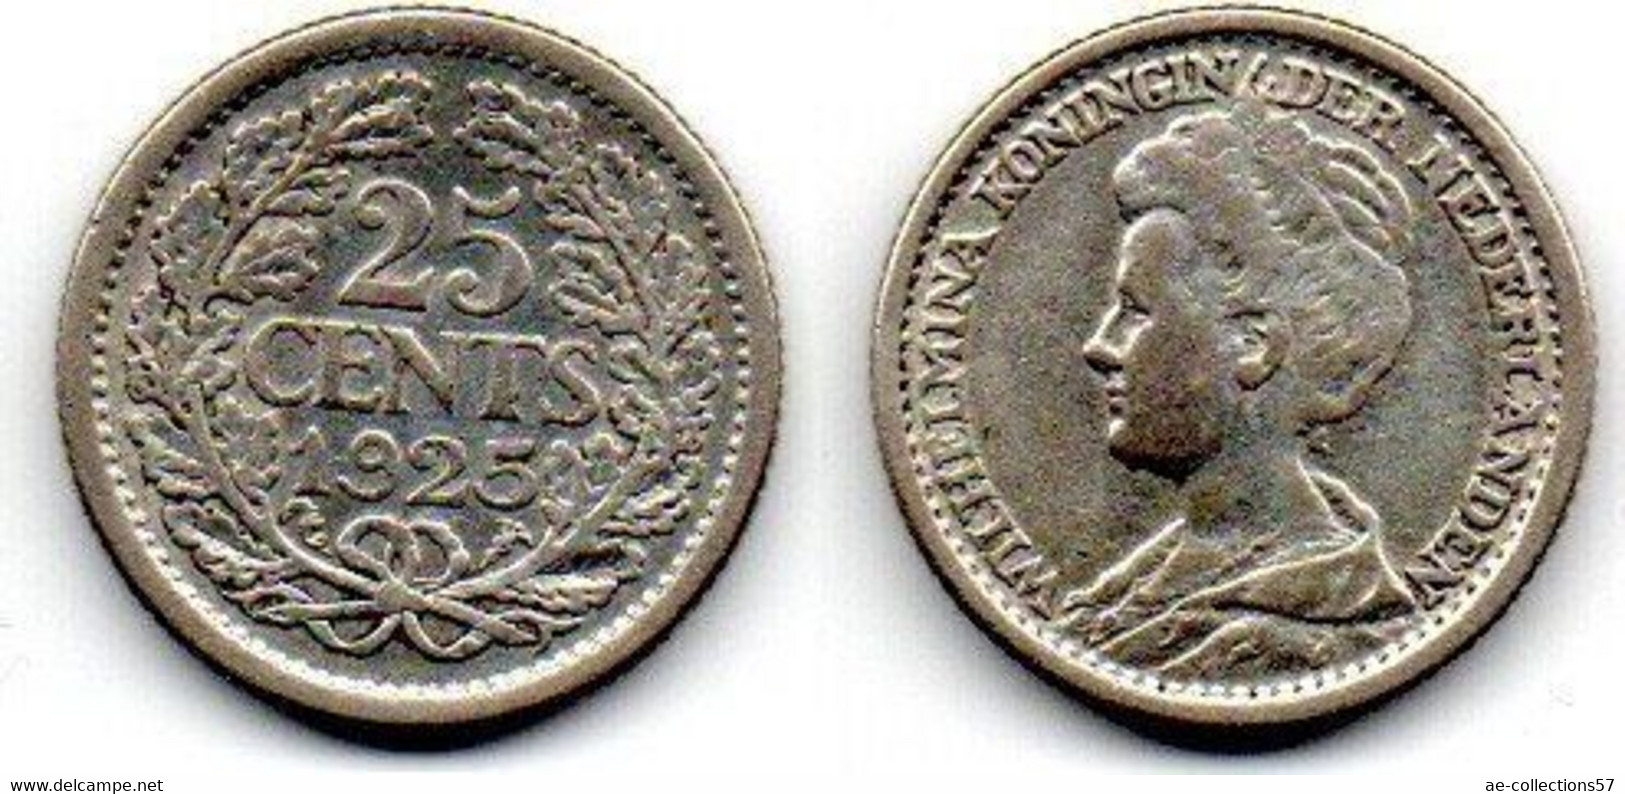 Pays Bas - 25 Cents 1925 TB+ - 25 Cent